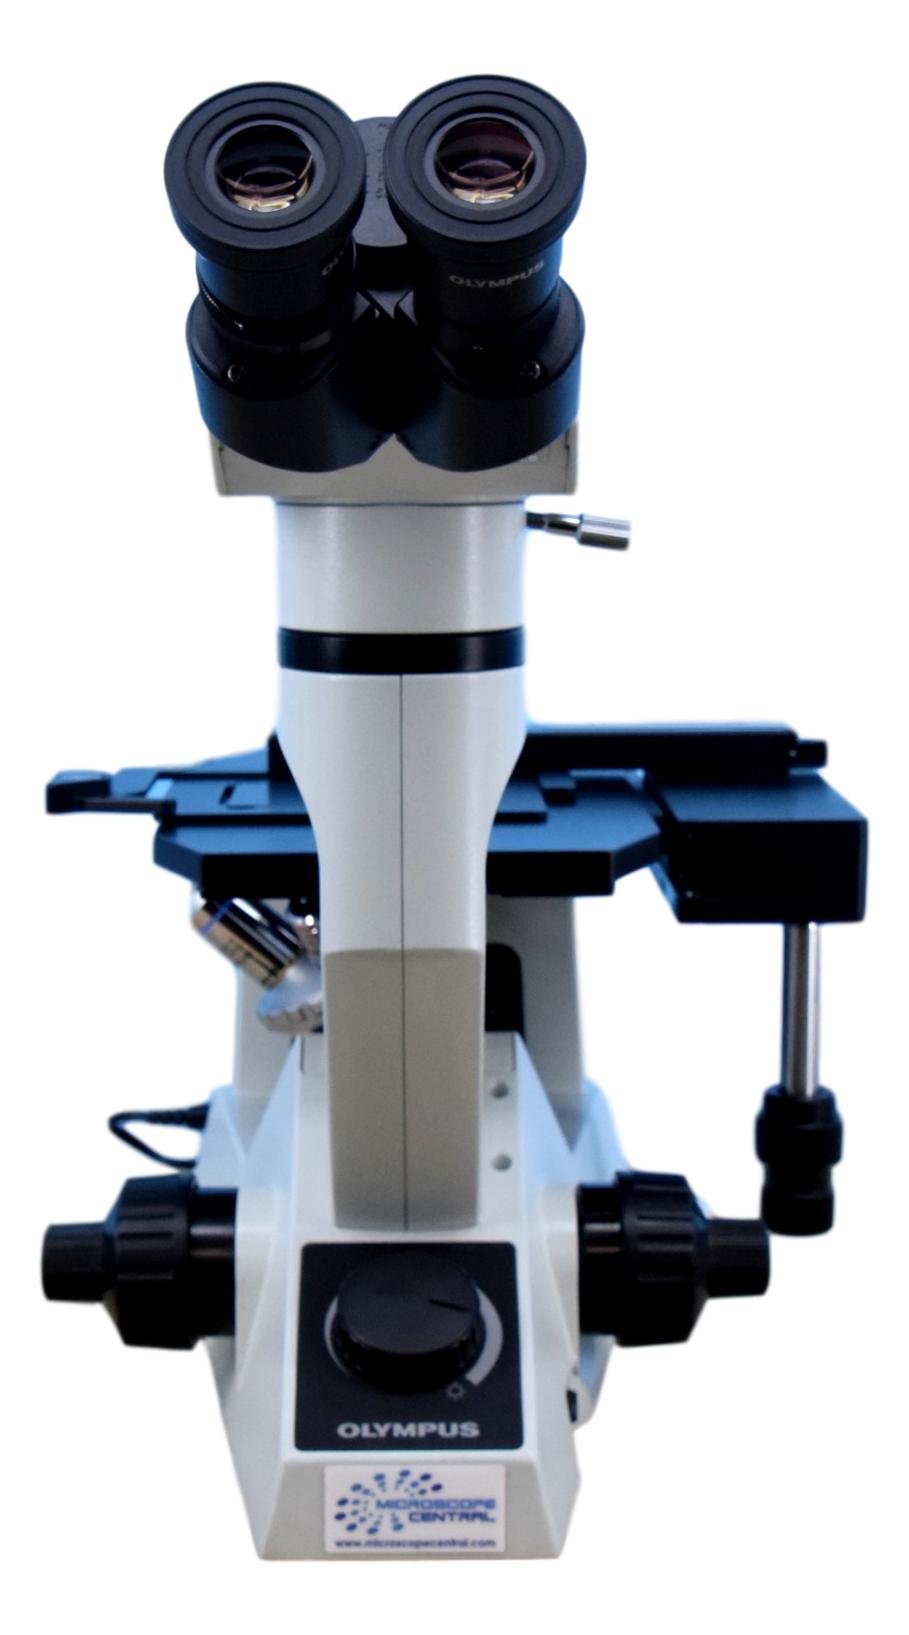 GX41 Microscope